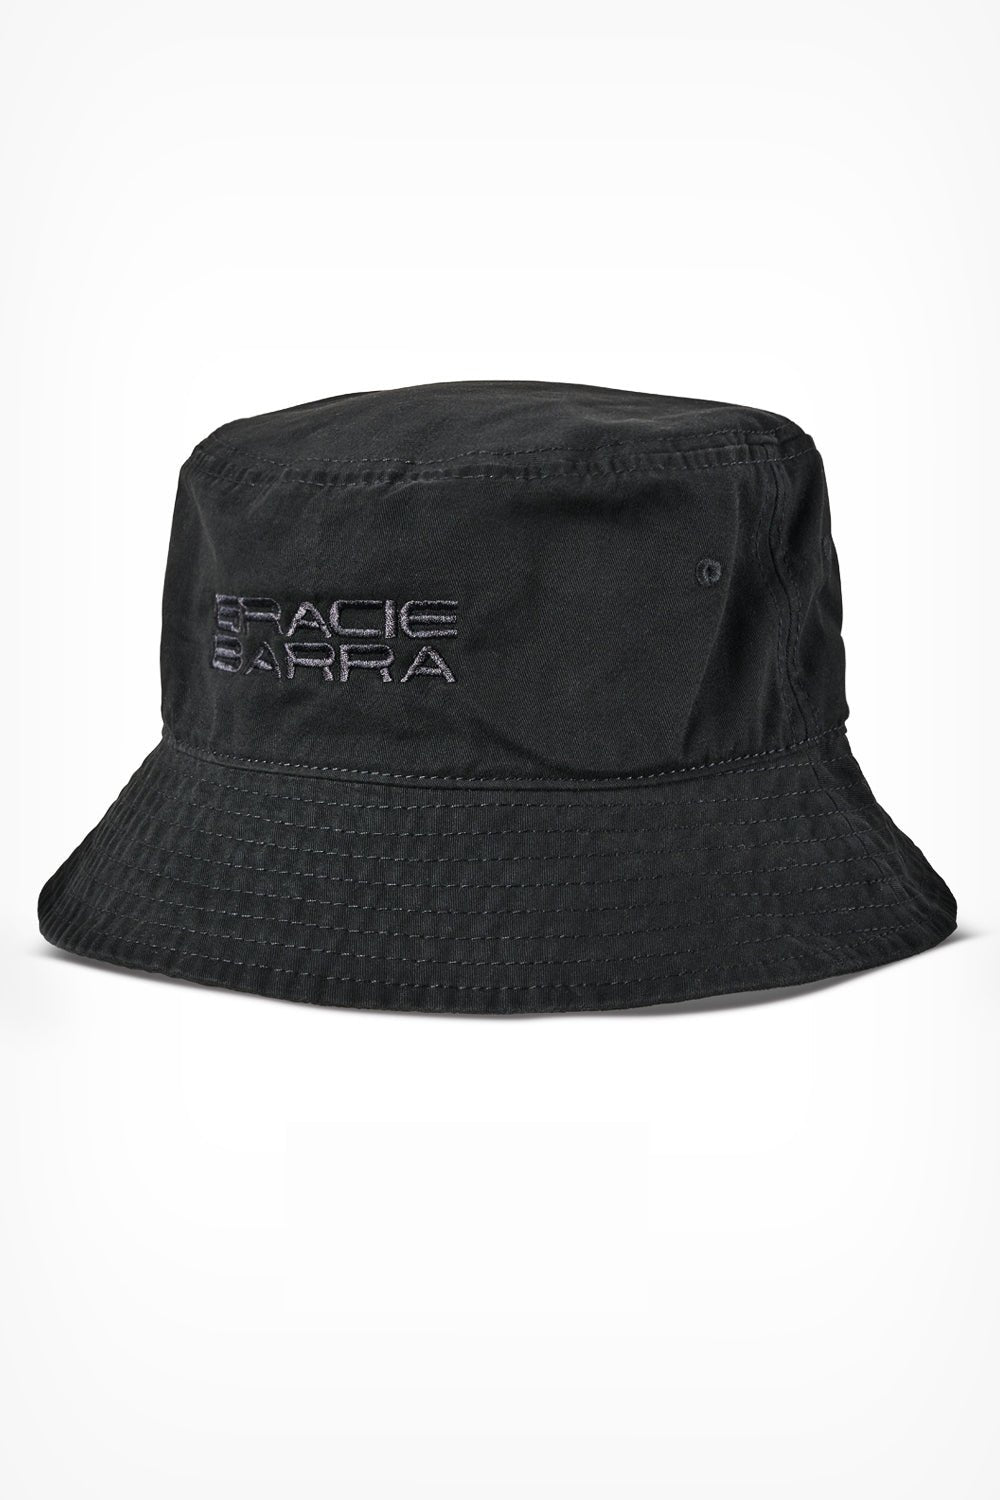 Incognito Bucket Hat - Black